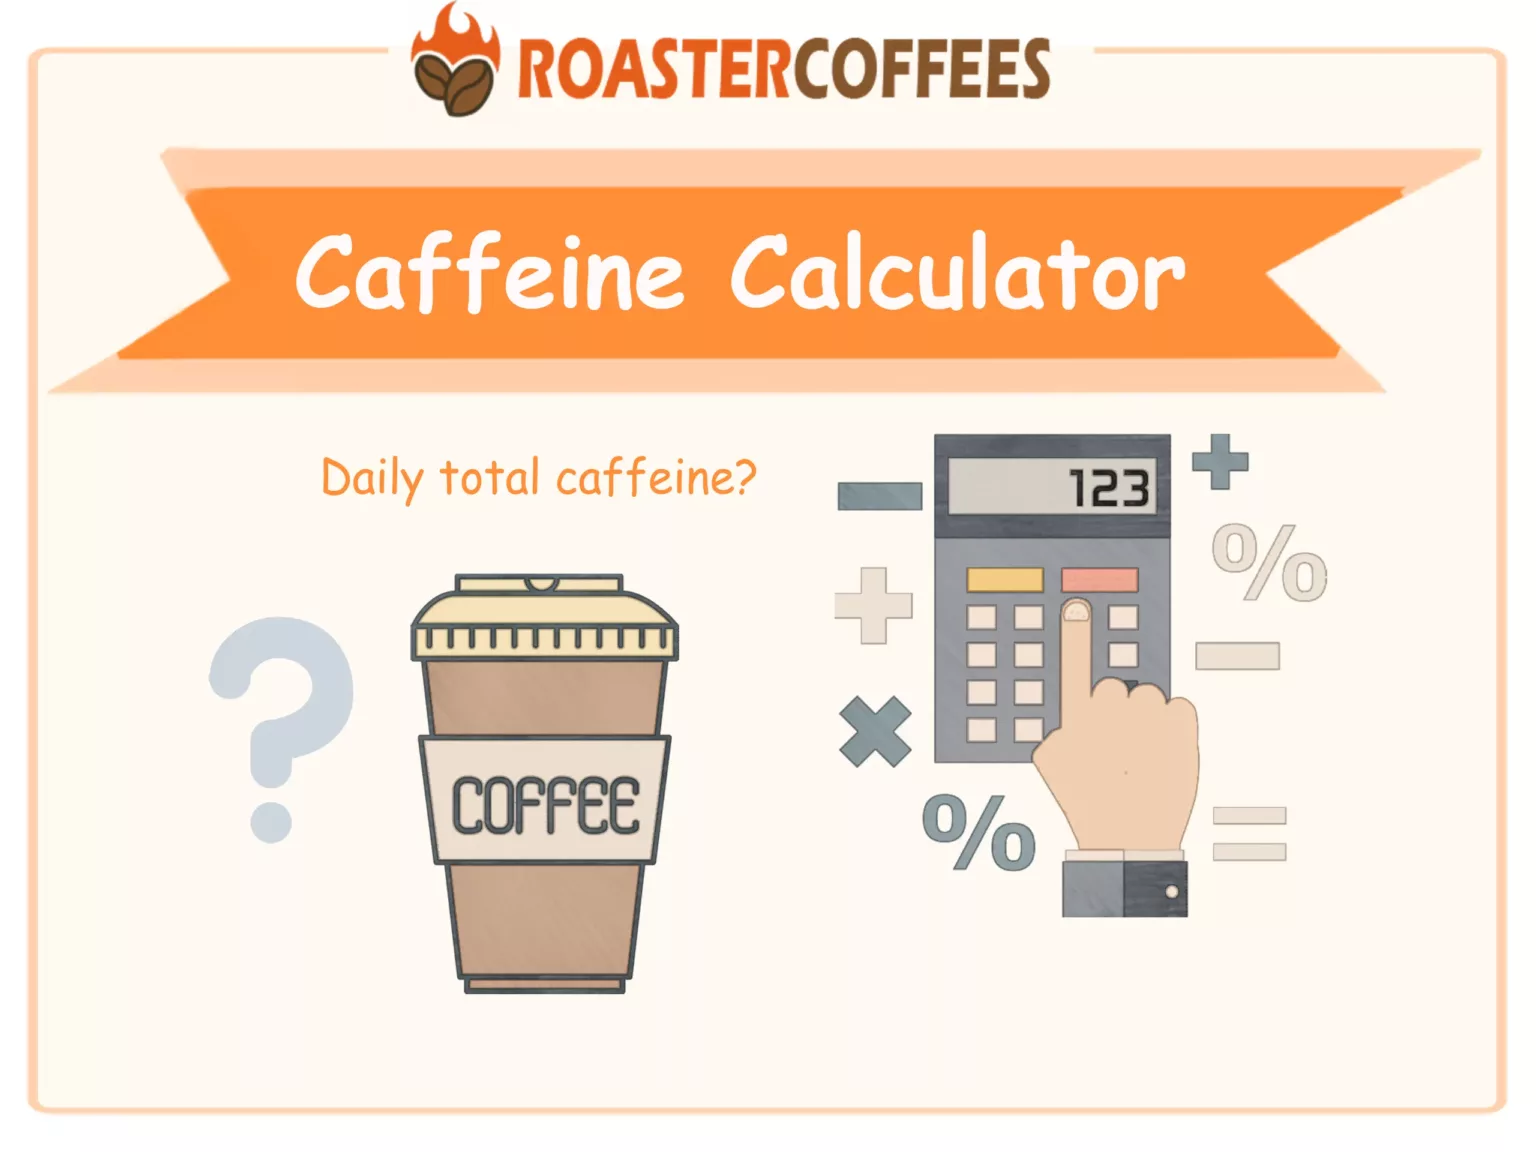 https://roastercoffees.com/caffeine-calculator/